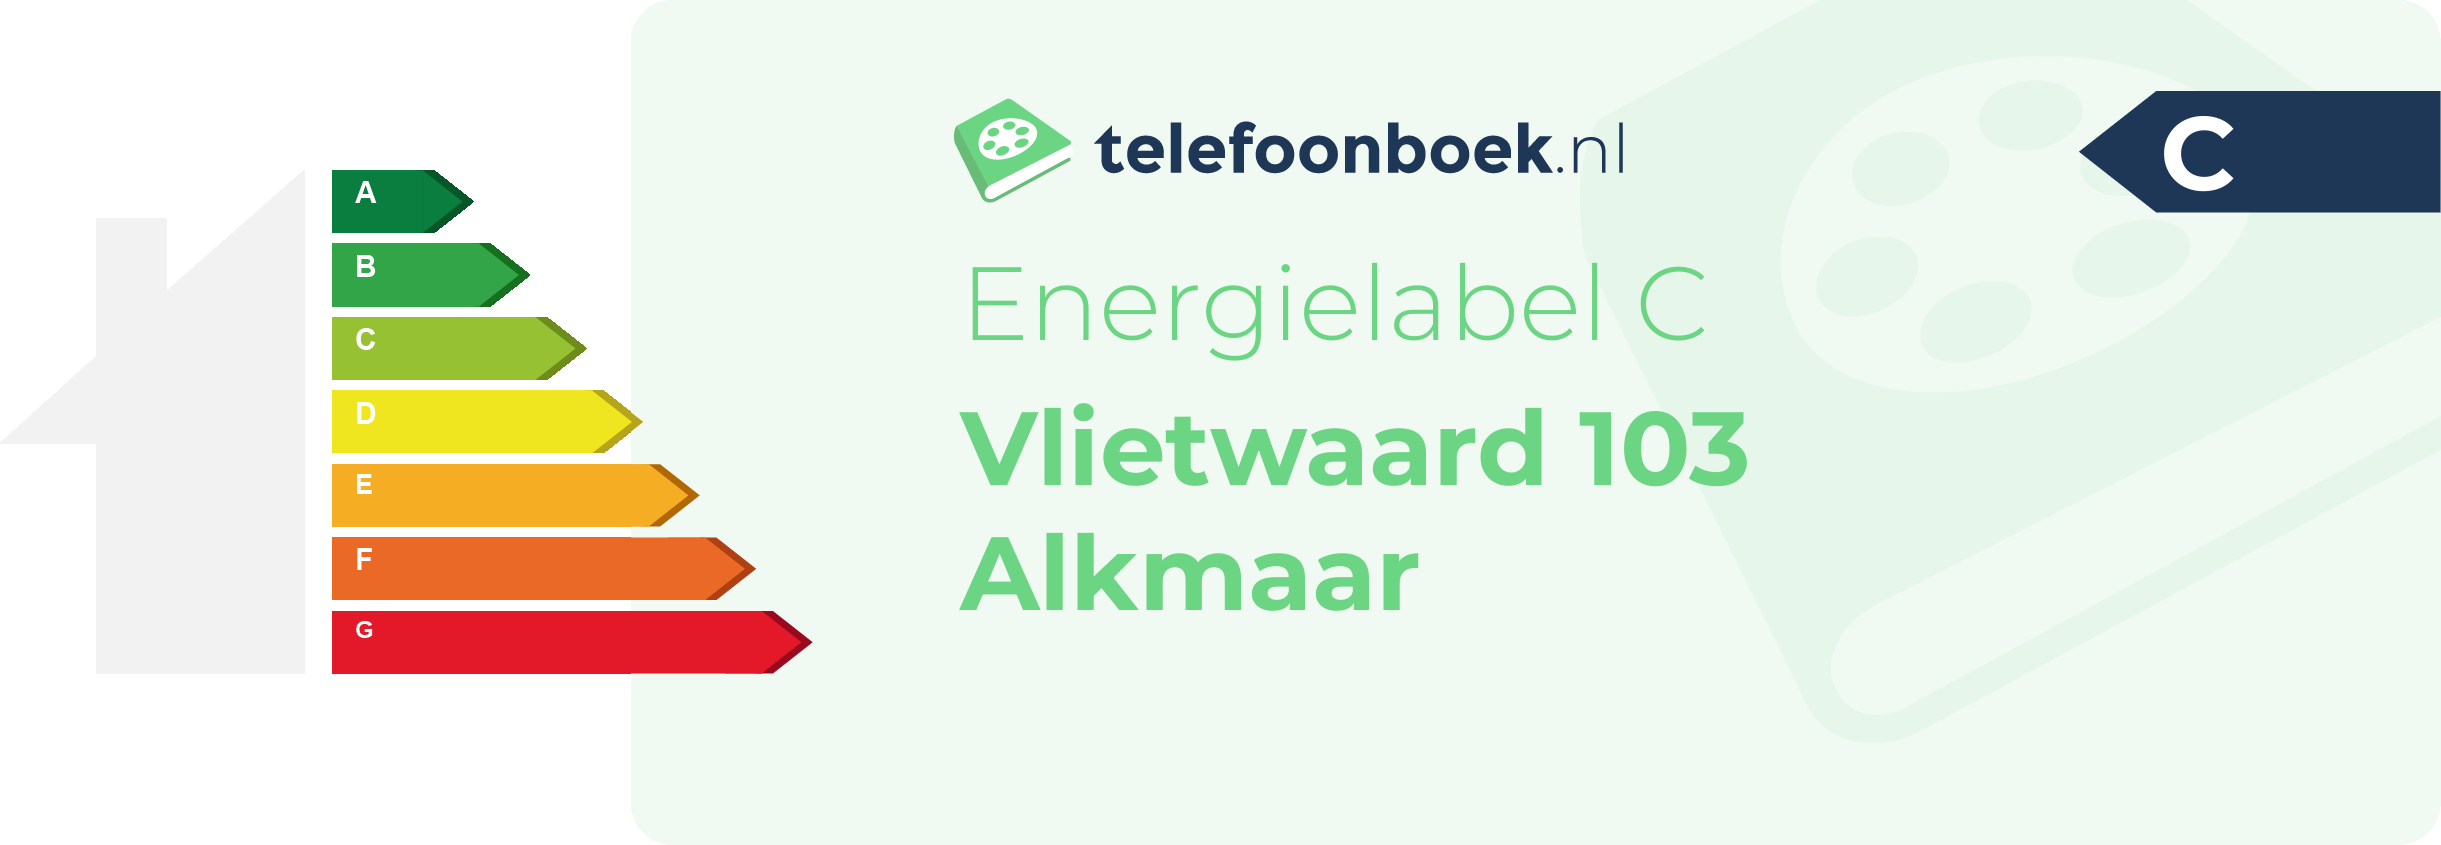 Energielabel Vlietwaard 103 Alkmaar